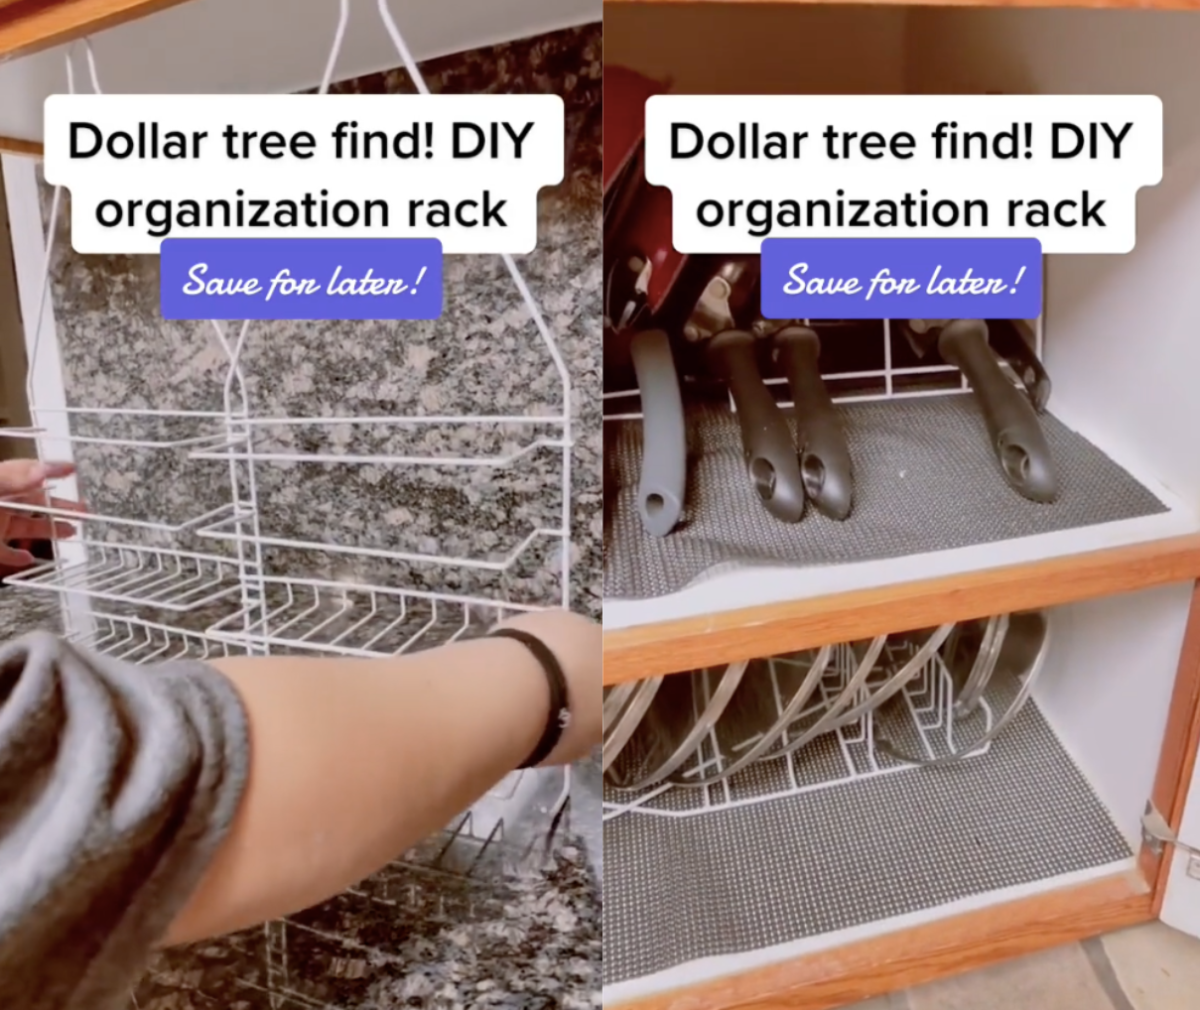 DIY Inexpensive Pot Lid Storage from Dollar Tree